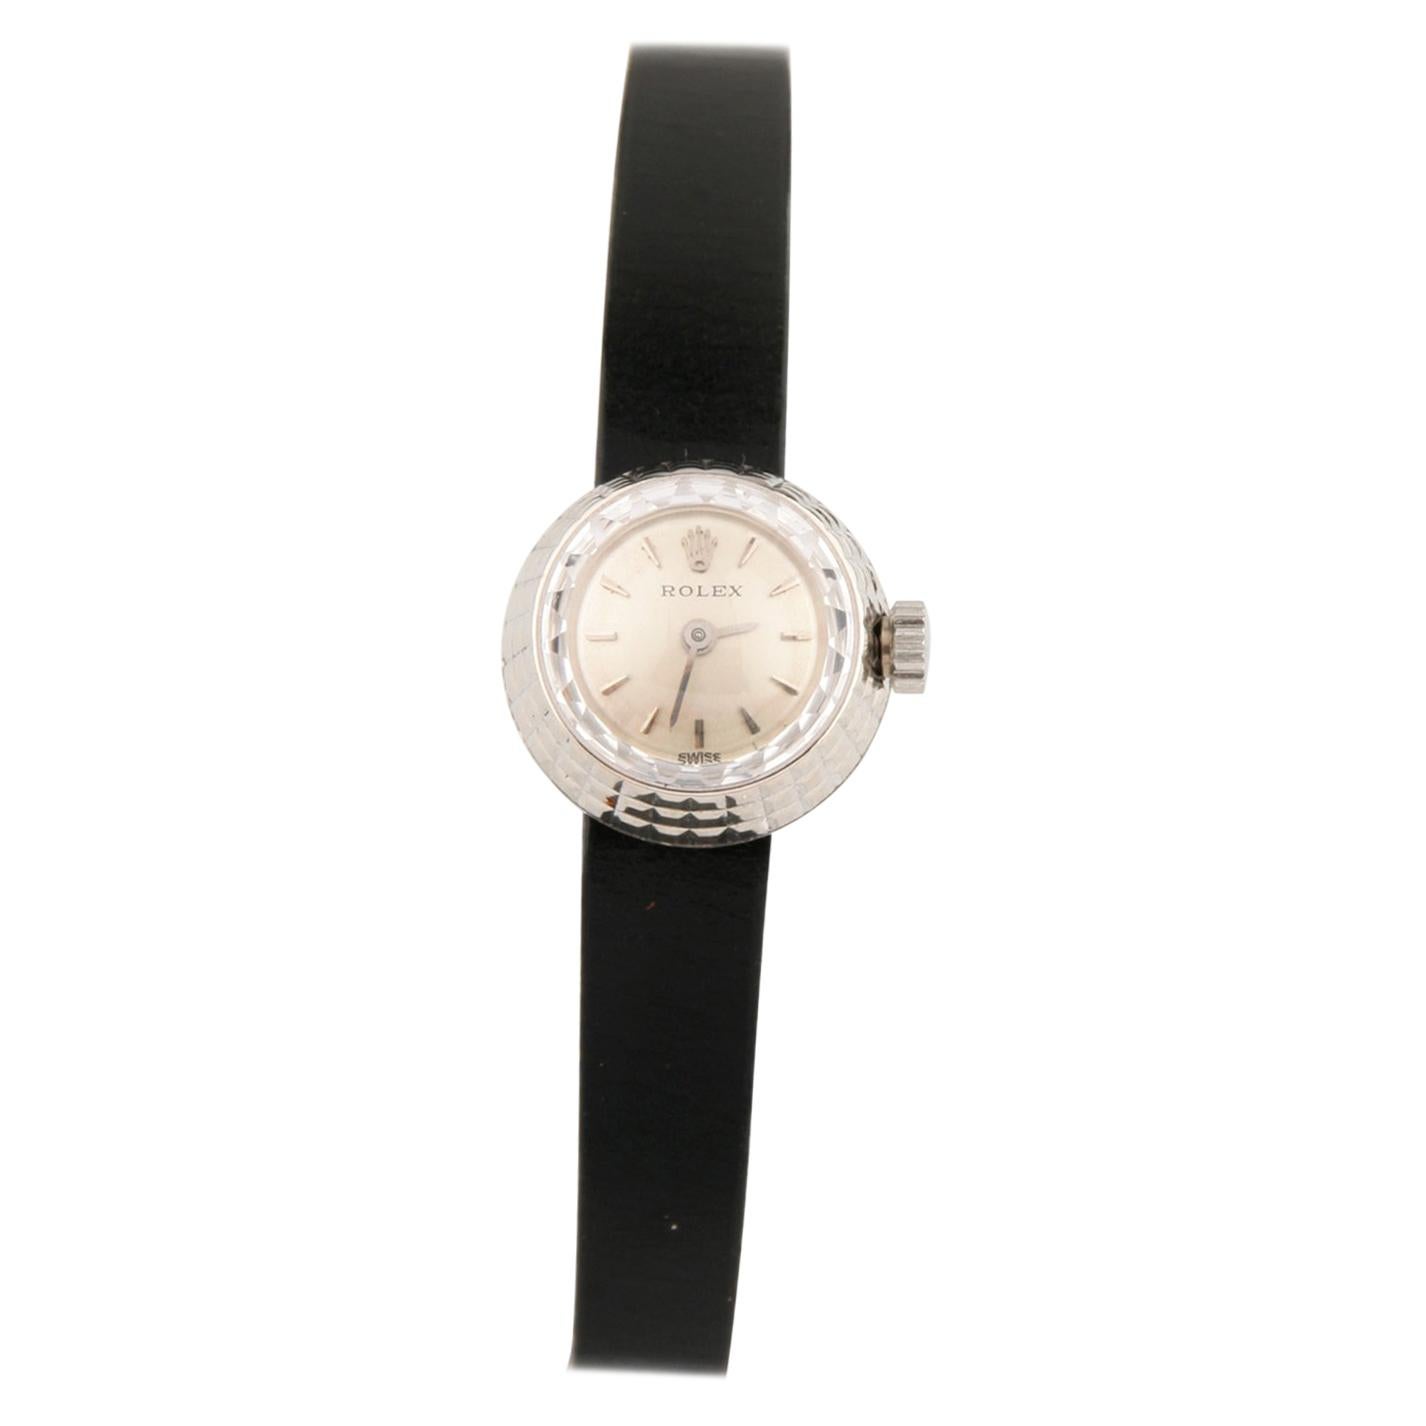 Rolex Women's Modele Depose #1401 18 Karat Watch Cameleon Leather Band, 1950s For Sale